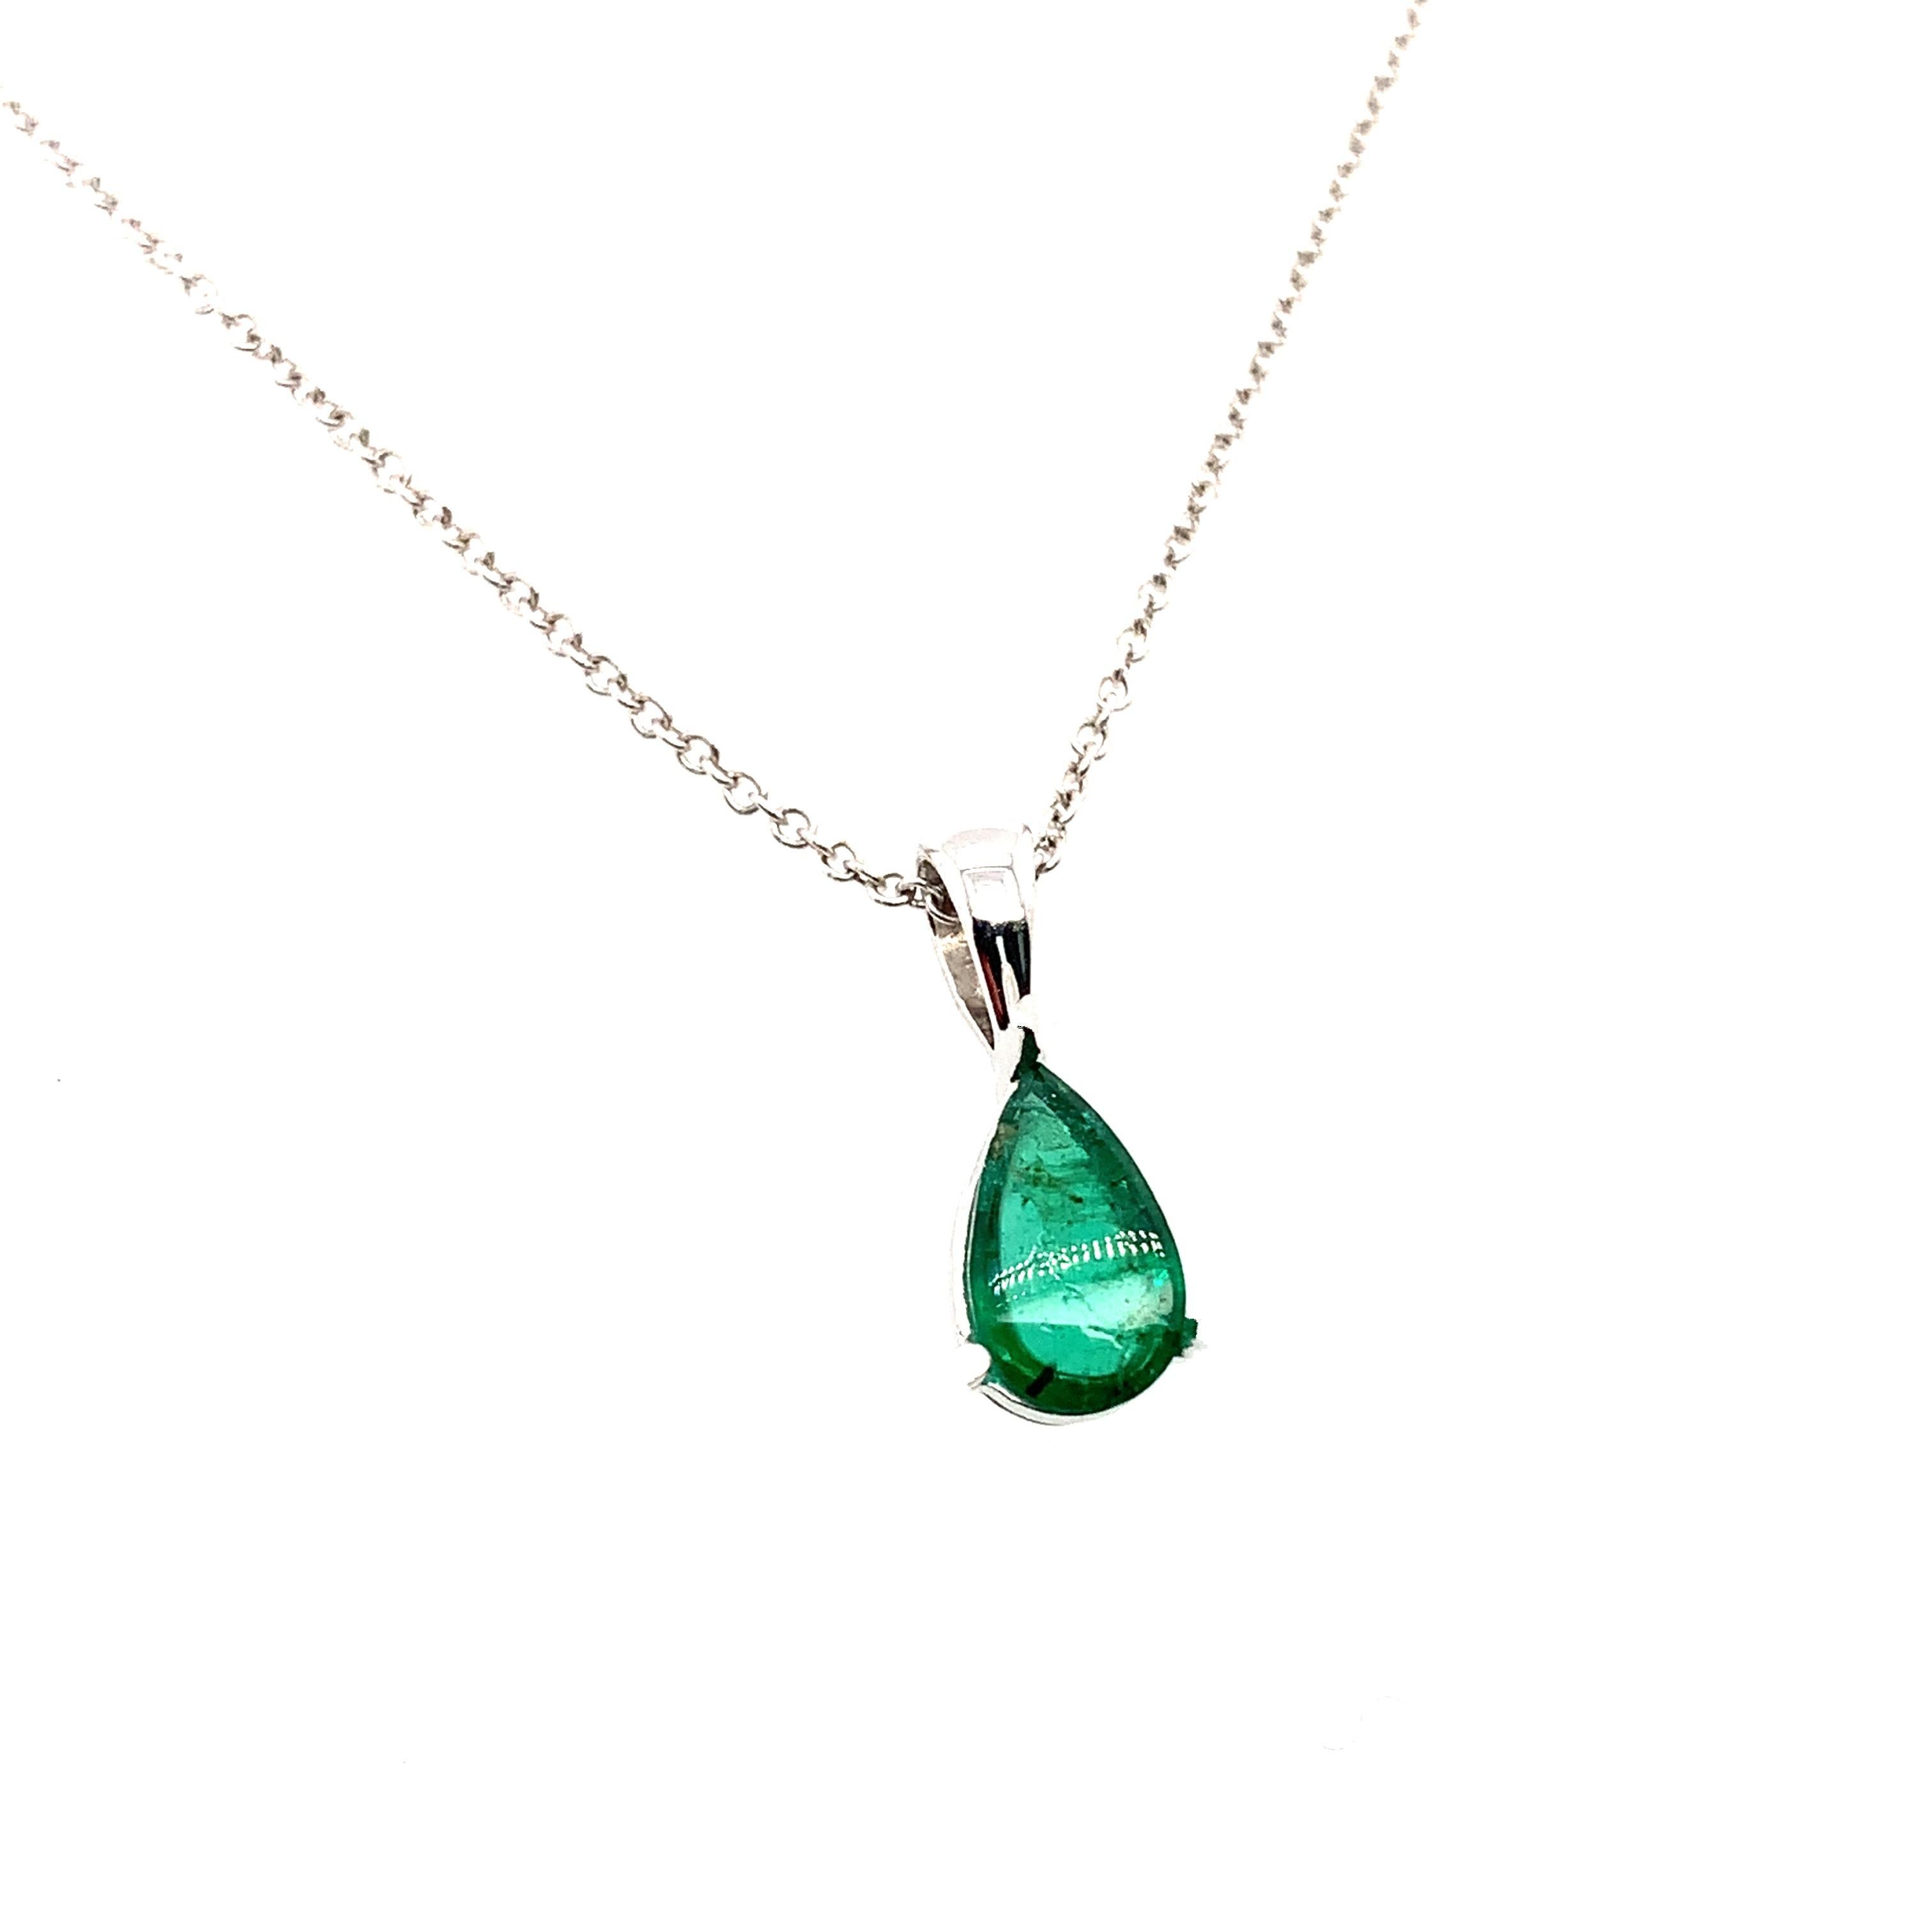 Green emerald soliatire drop pendant necklace 18k white gold In New Condition For Sale In London, GB